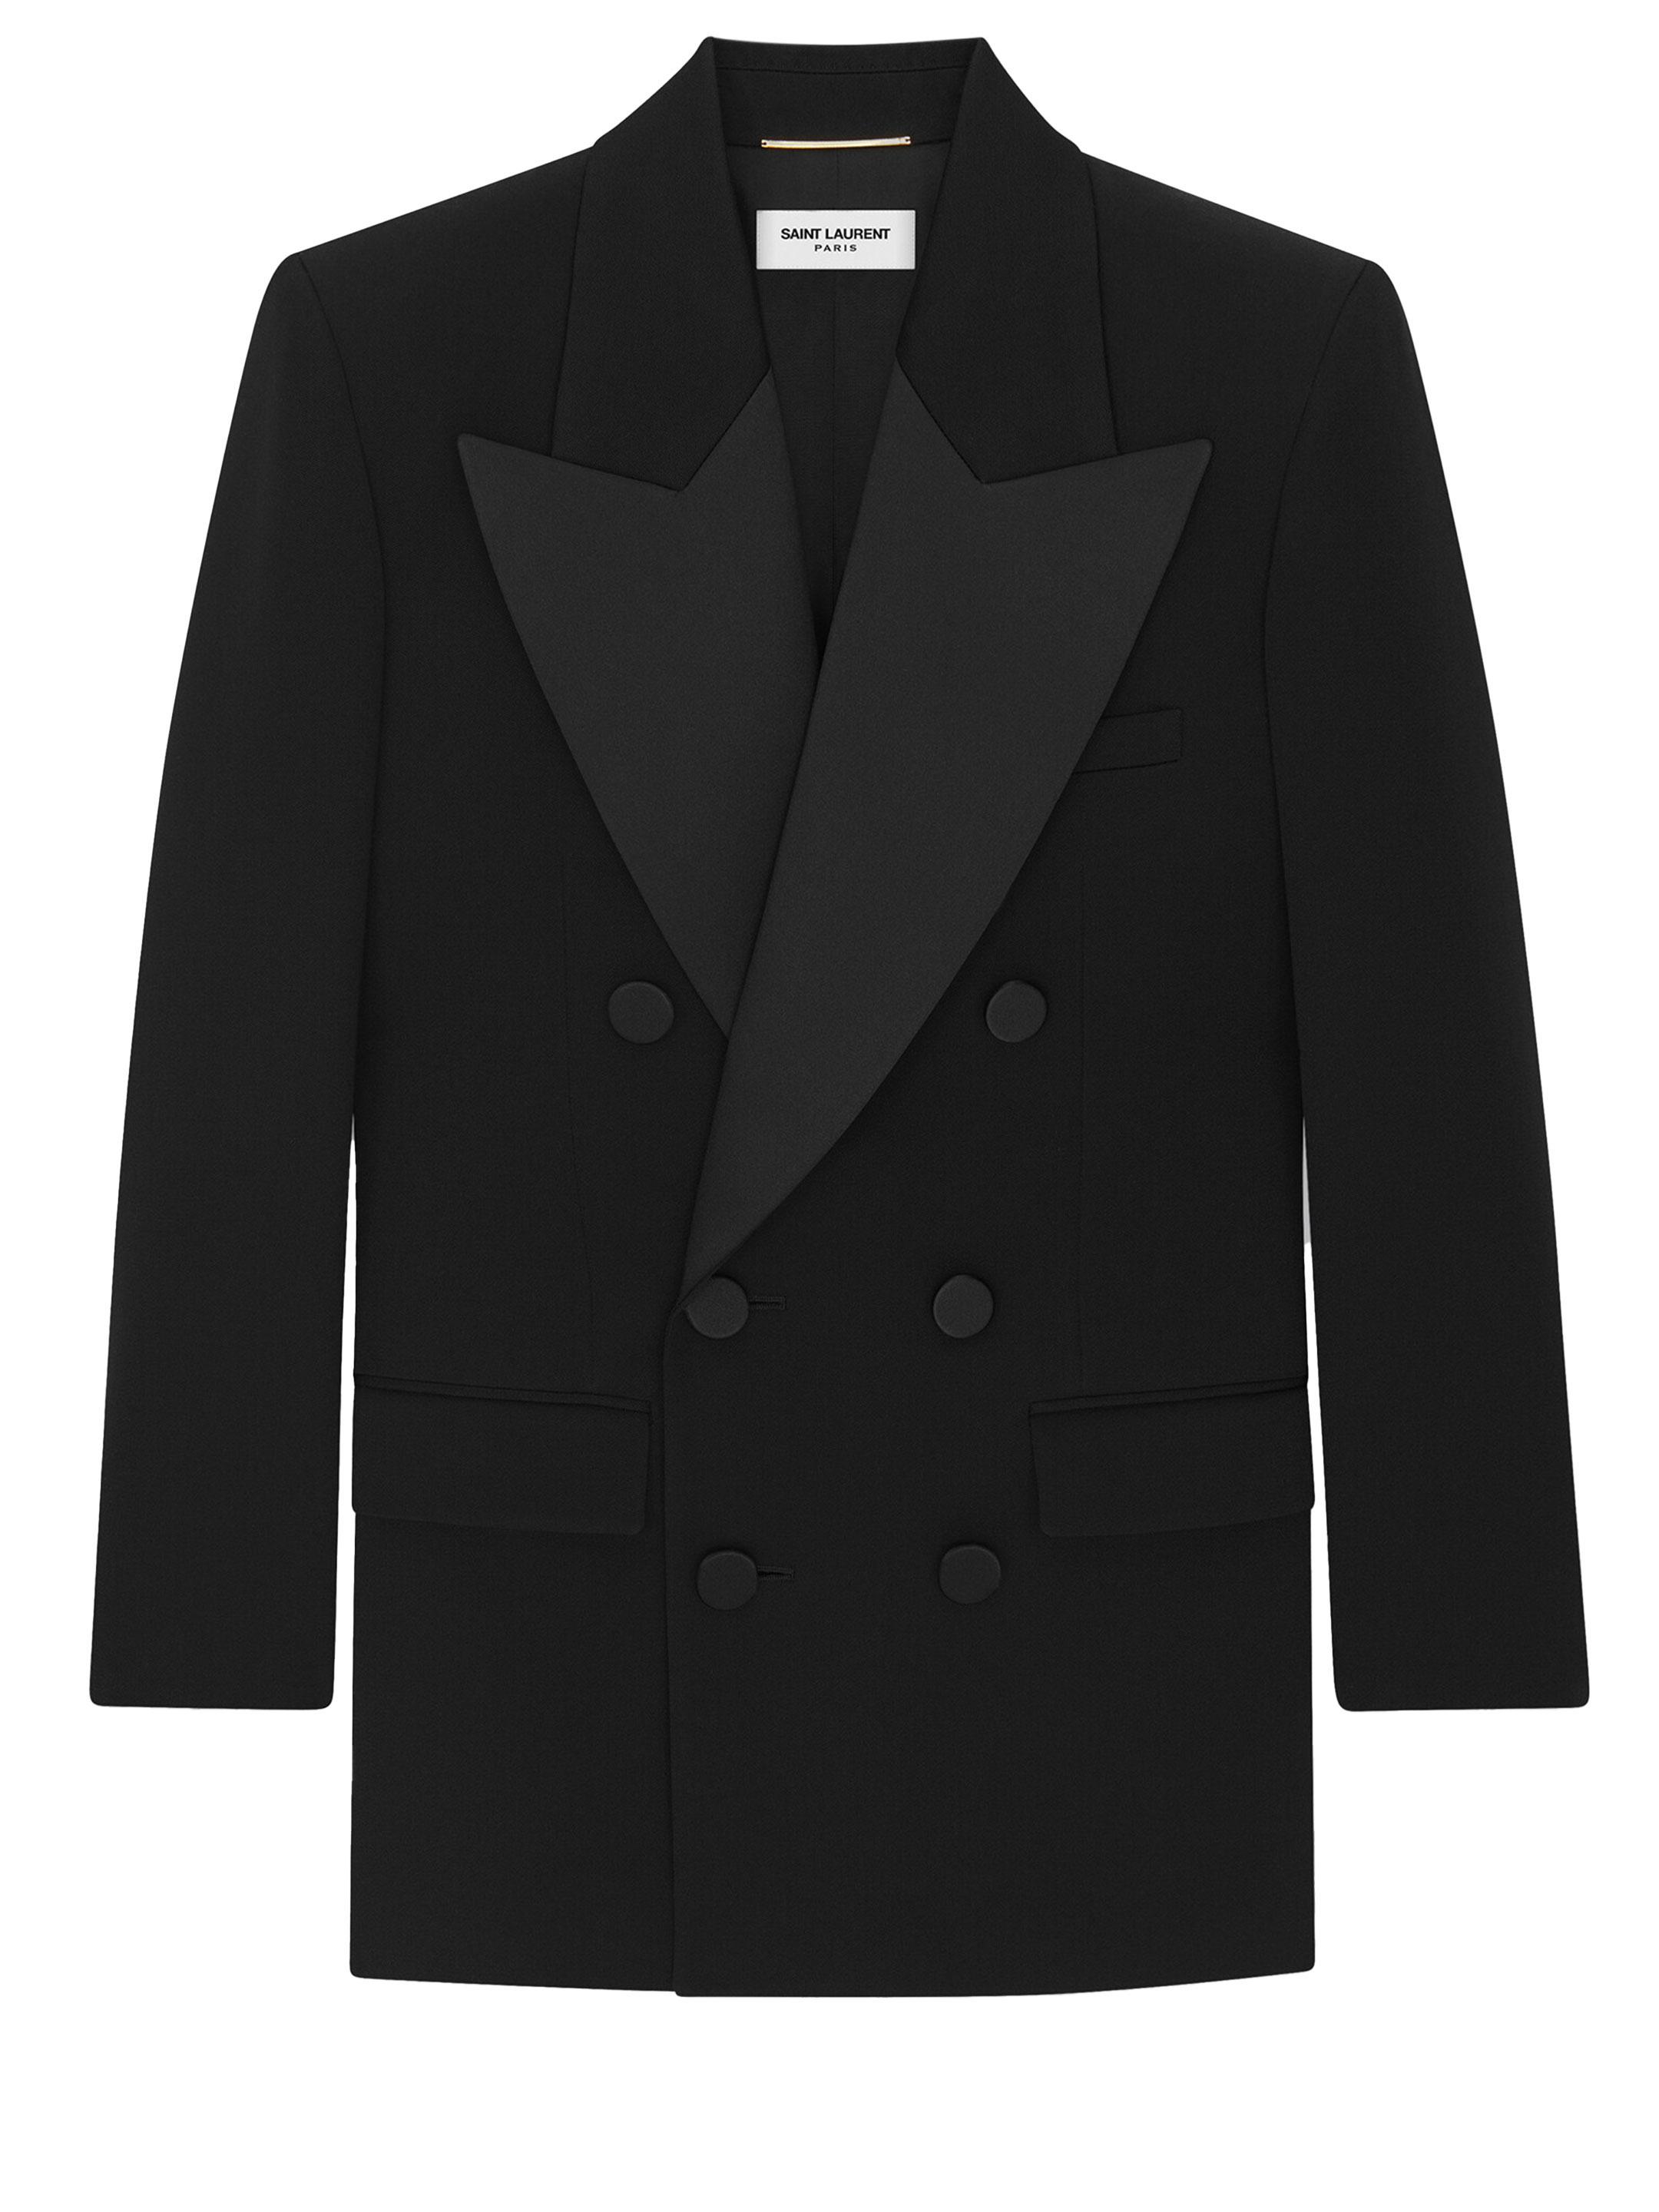 Saint Laurent Tuxedo Jacket in Black | Lyst